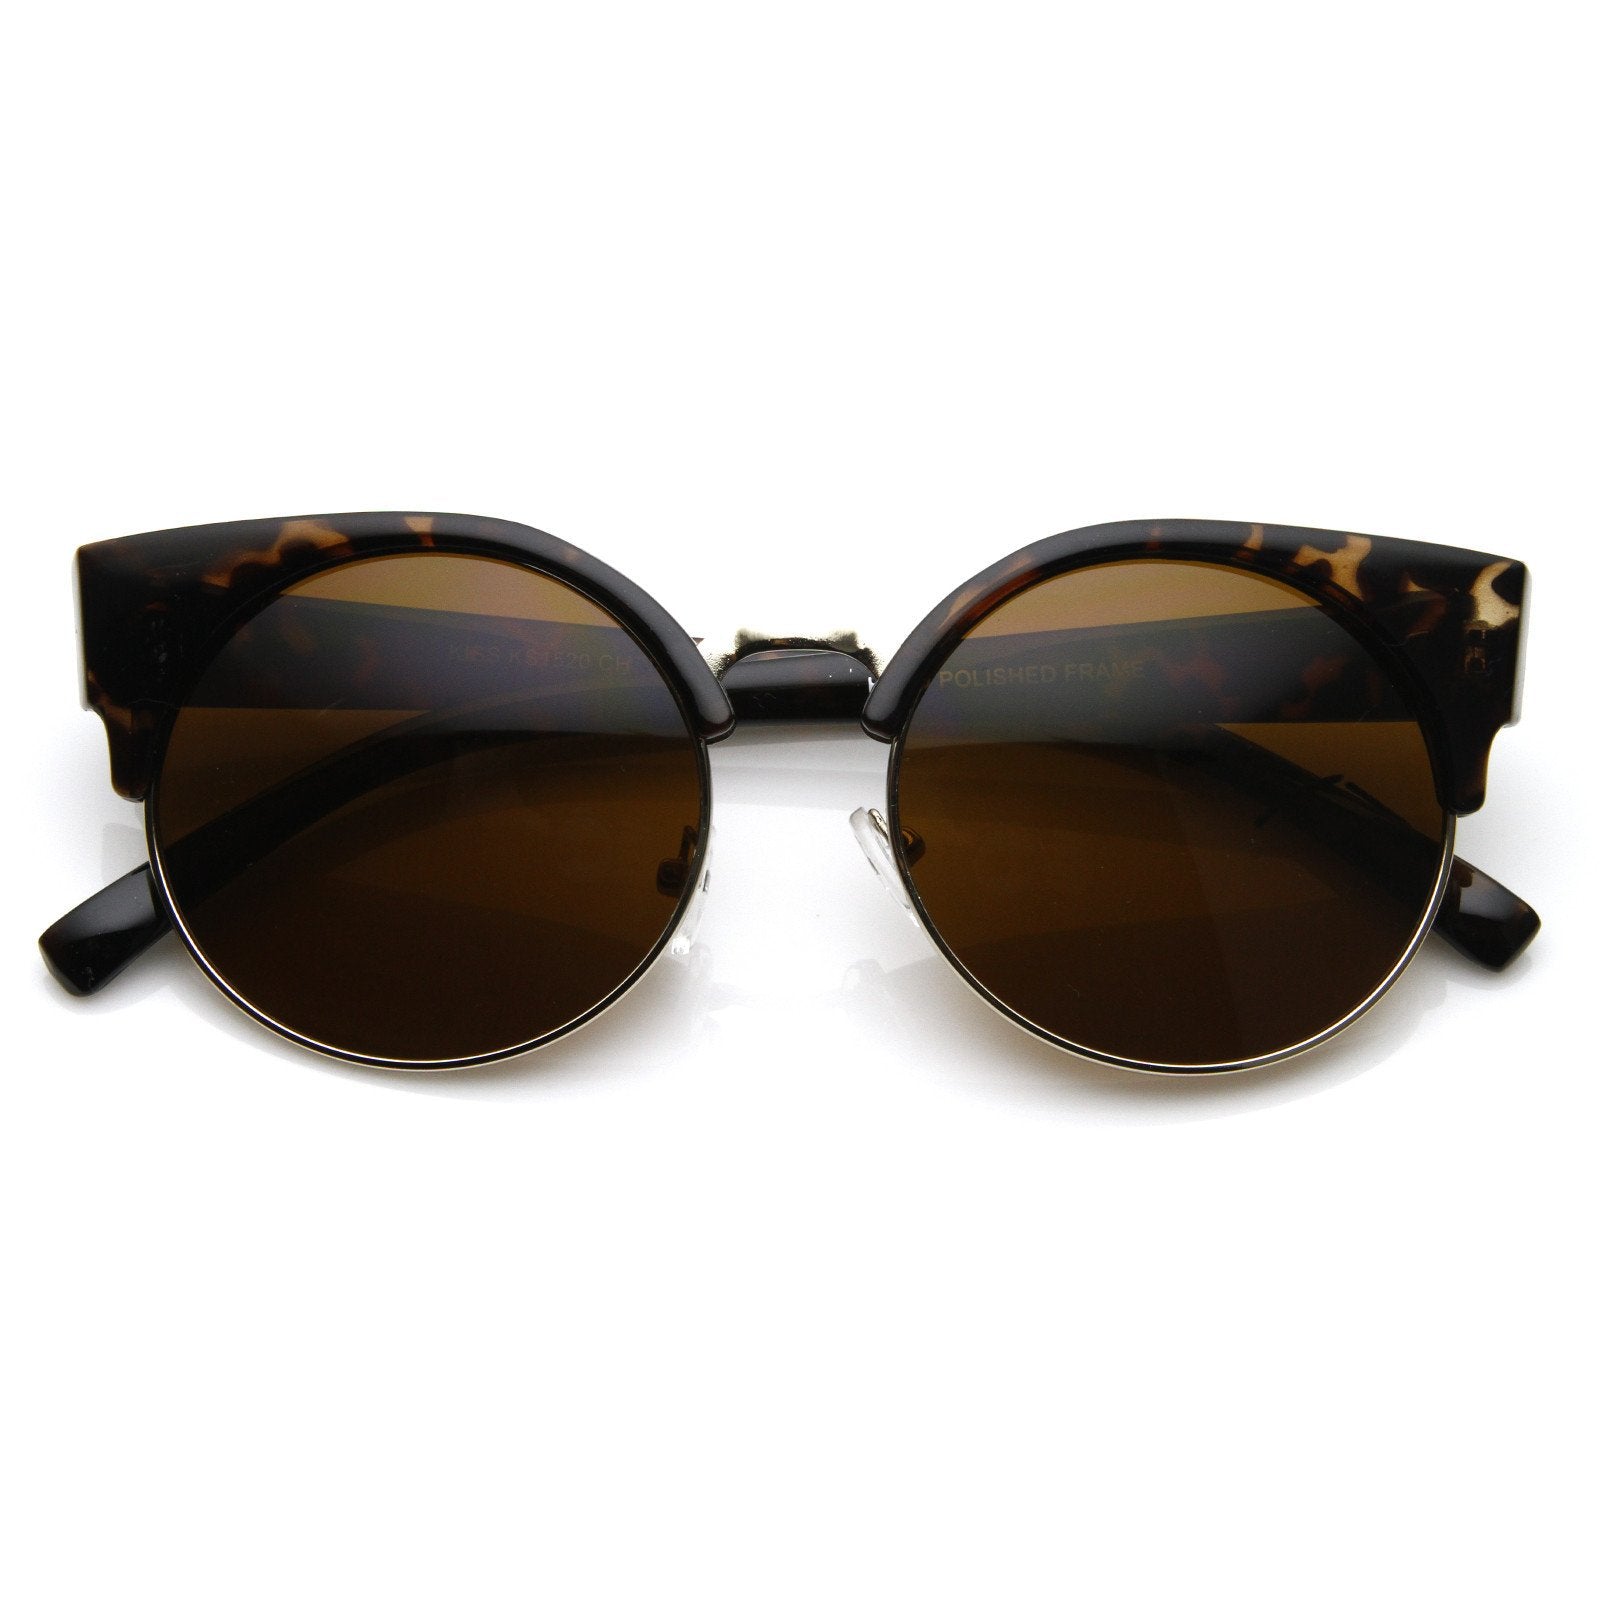 zeroUV Vintage Inspired Round Circle Cat Eye Sunglasses